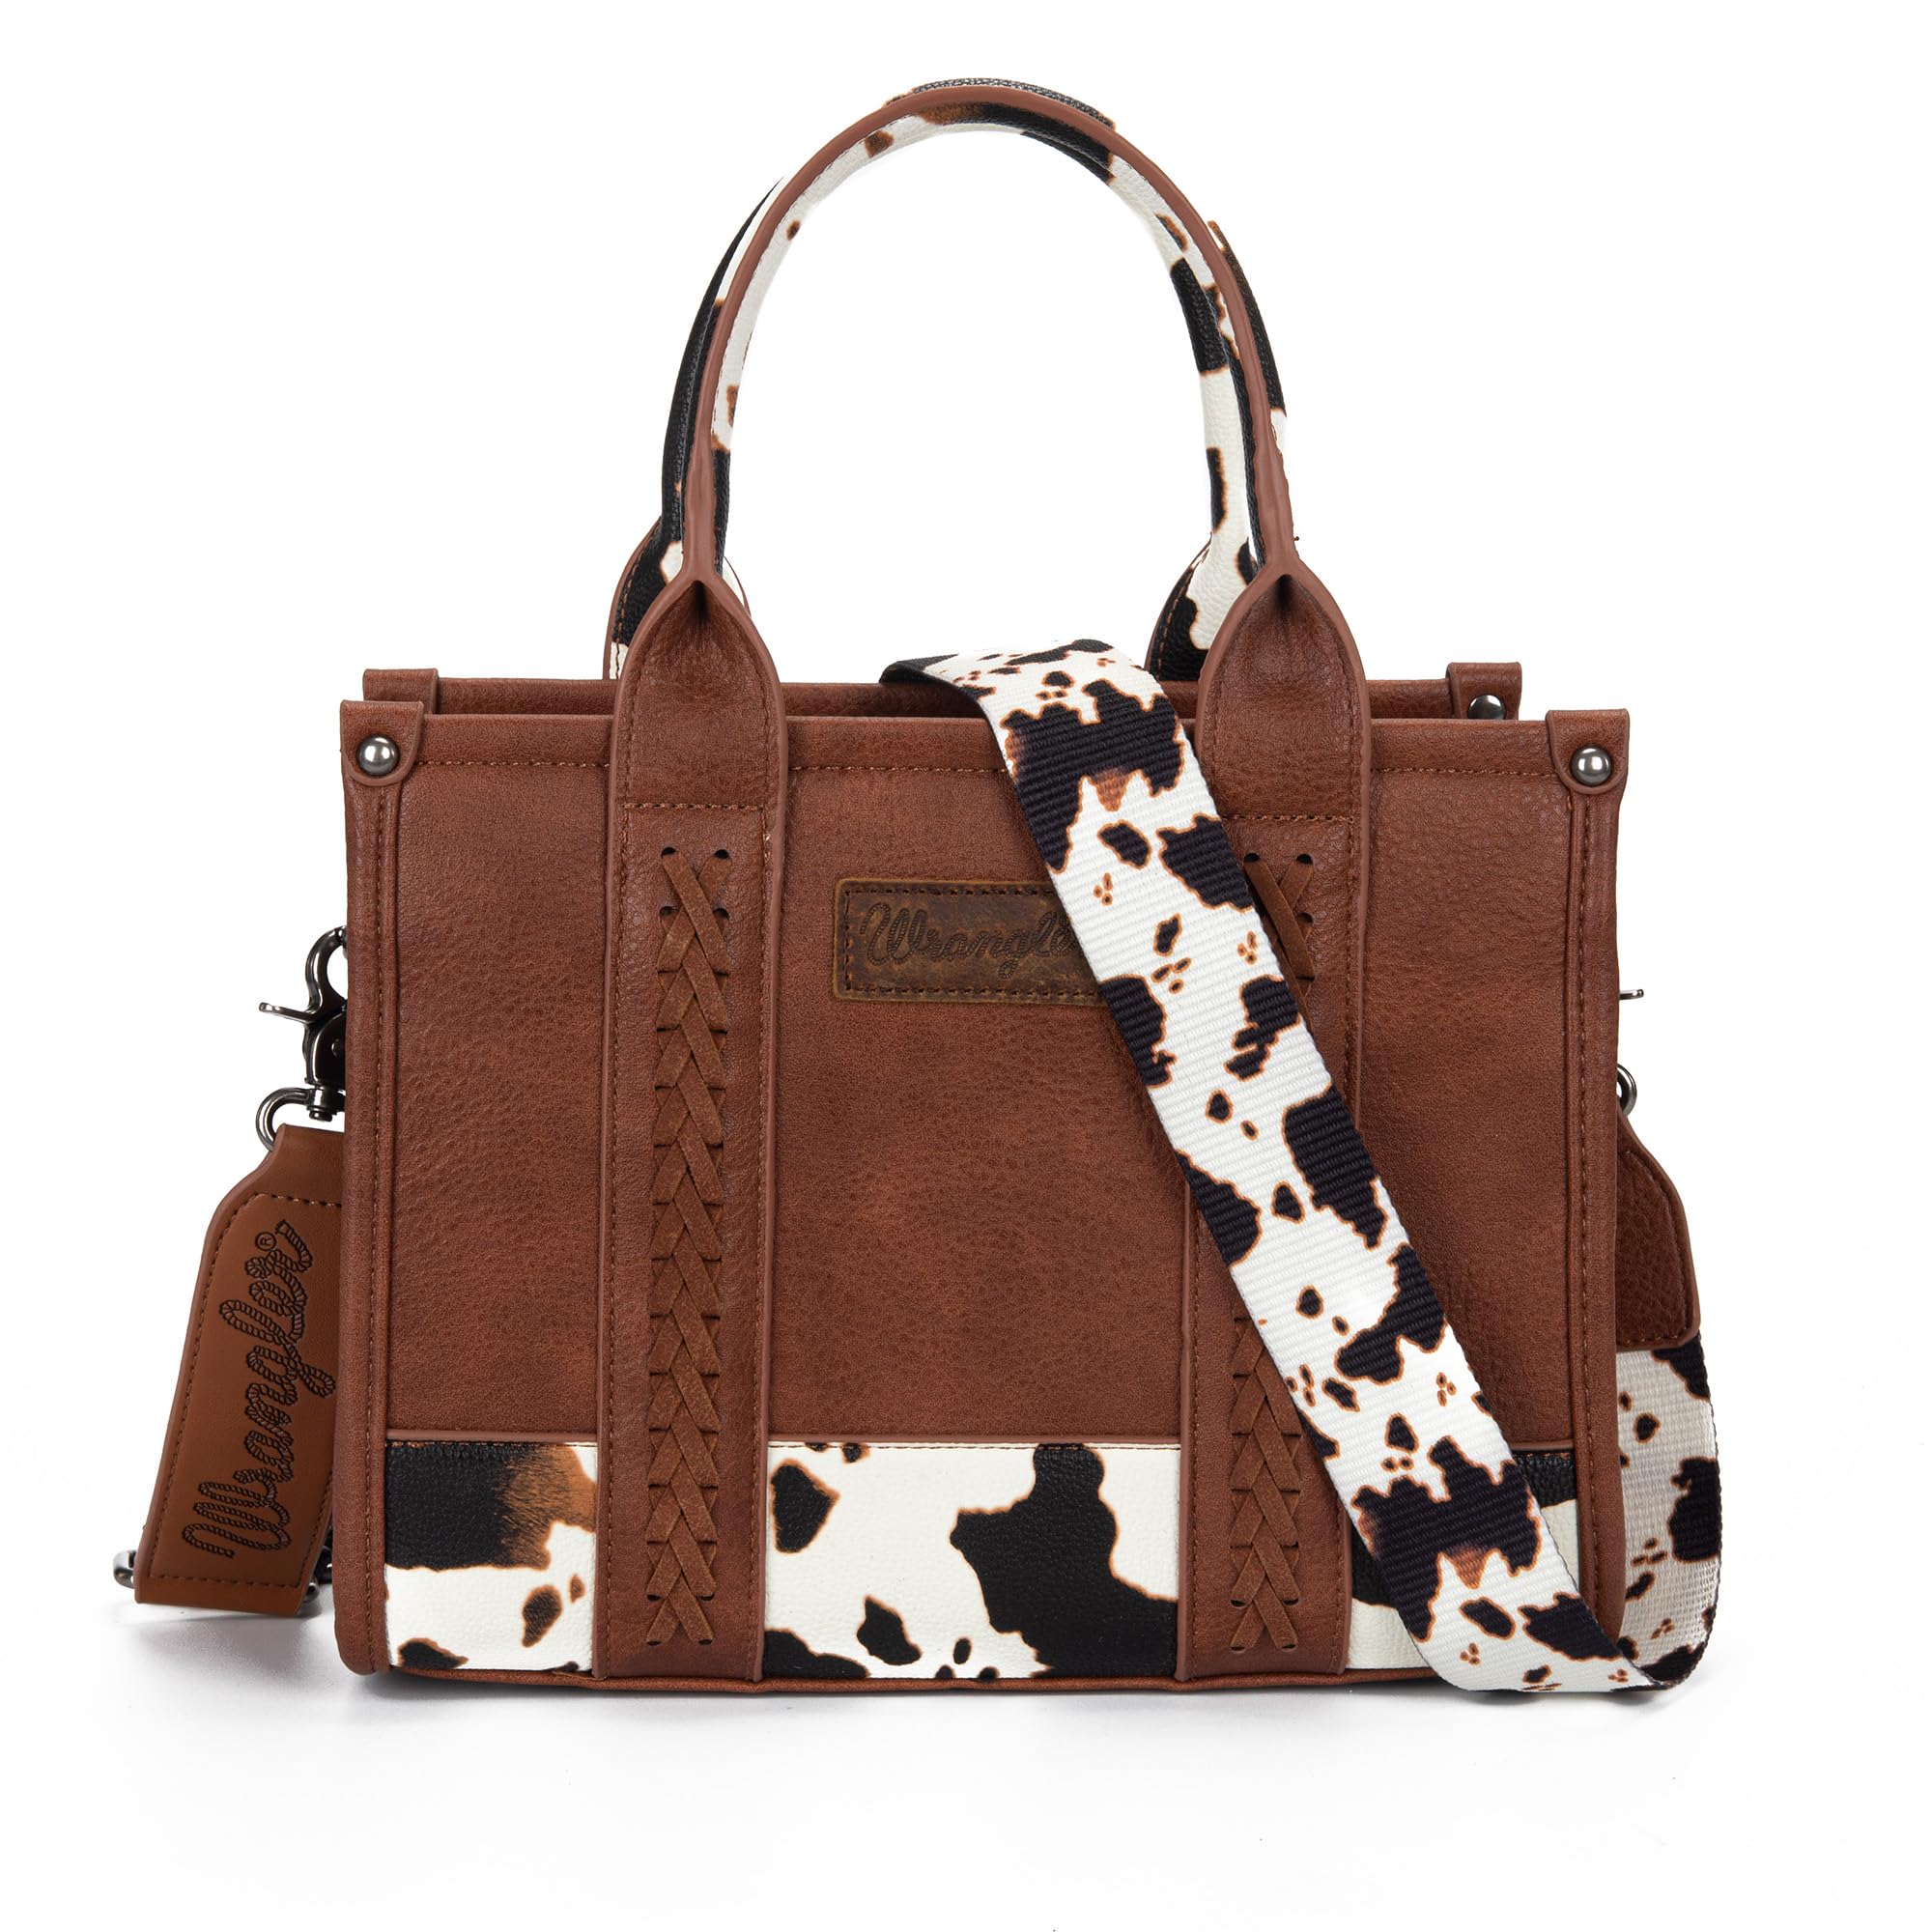 Wrangler Tote Bag for Women Cow Print Purse Top Handle Handbags Vintage Satchel